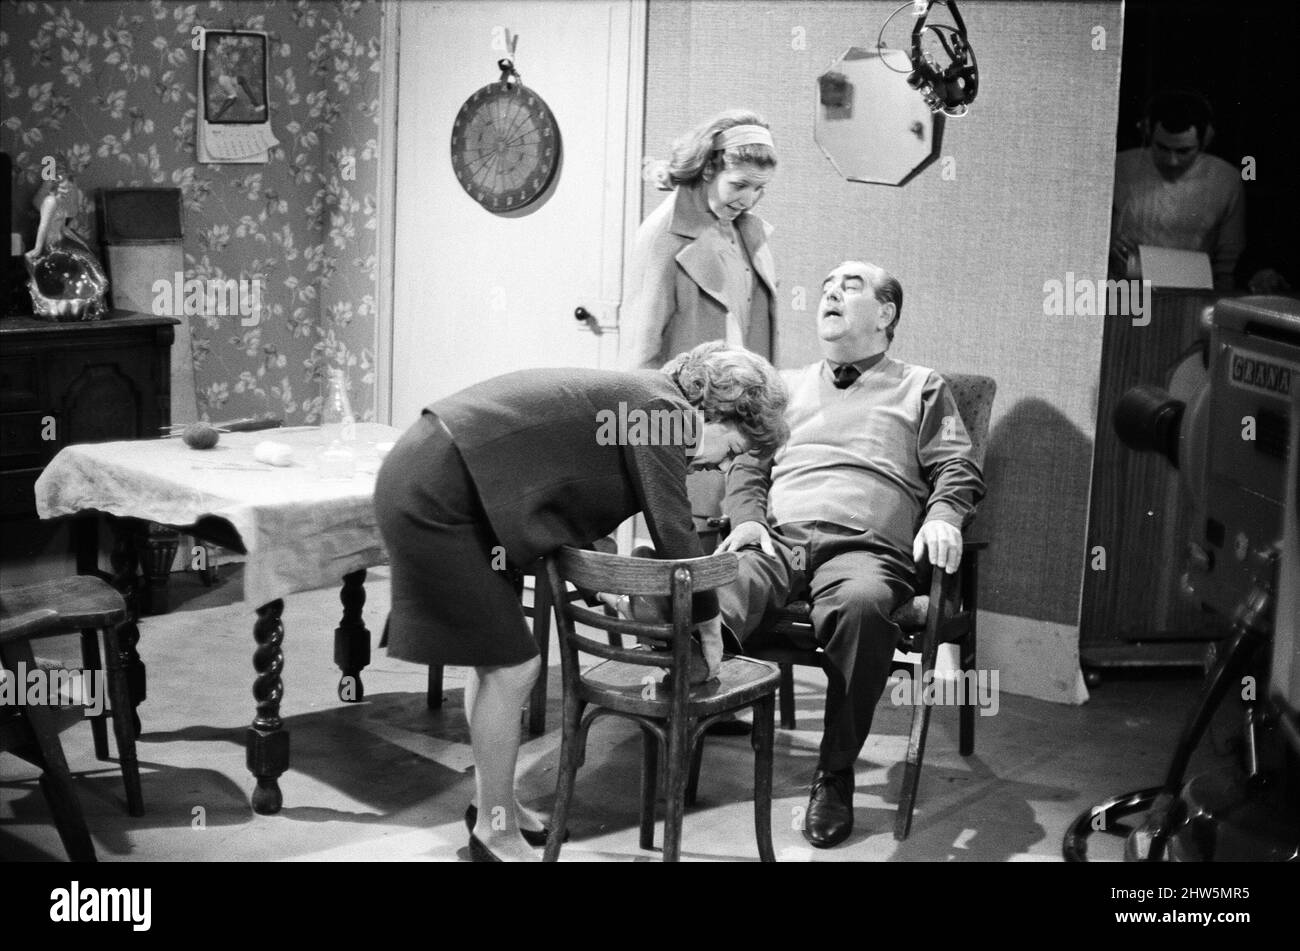 The cast of 'Coronation Street' on set. Jean Alexander, Anne Reid and Bernard Youens. 16th April 1968. Stock Photo